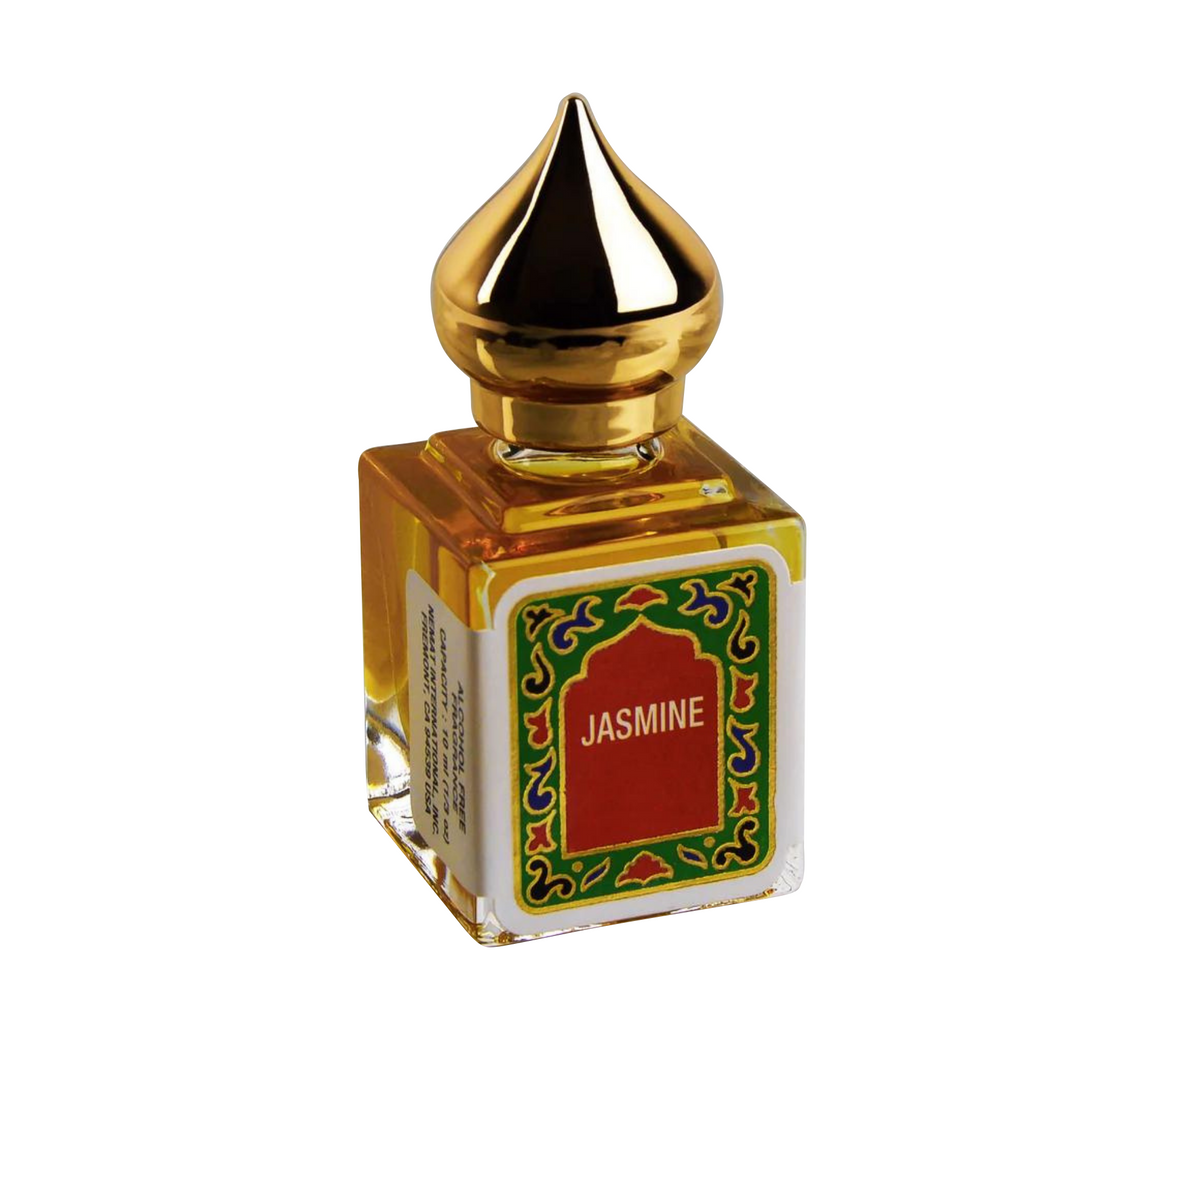 Primary image of Jasmine Fragrance Minaret Cap